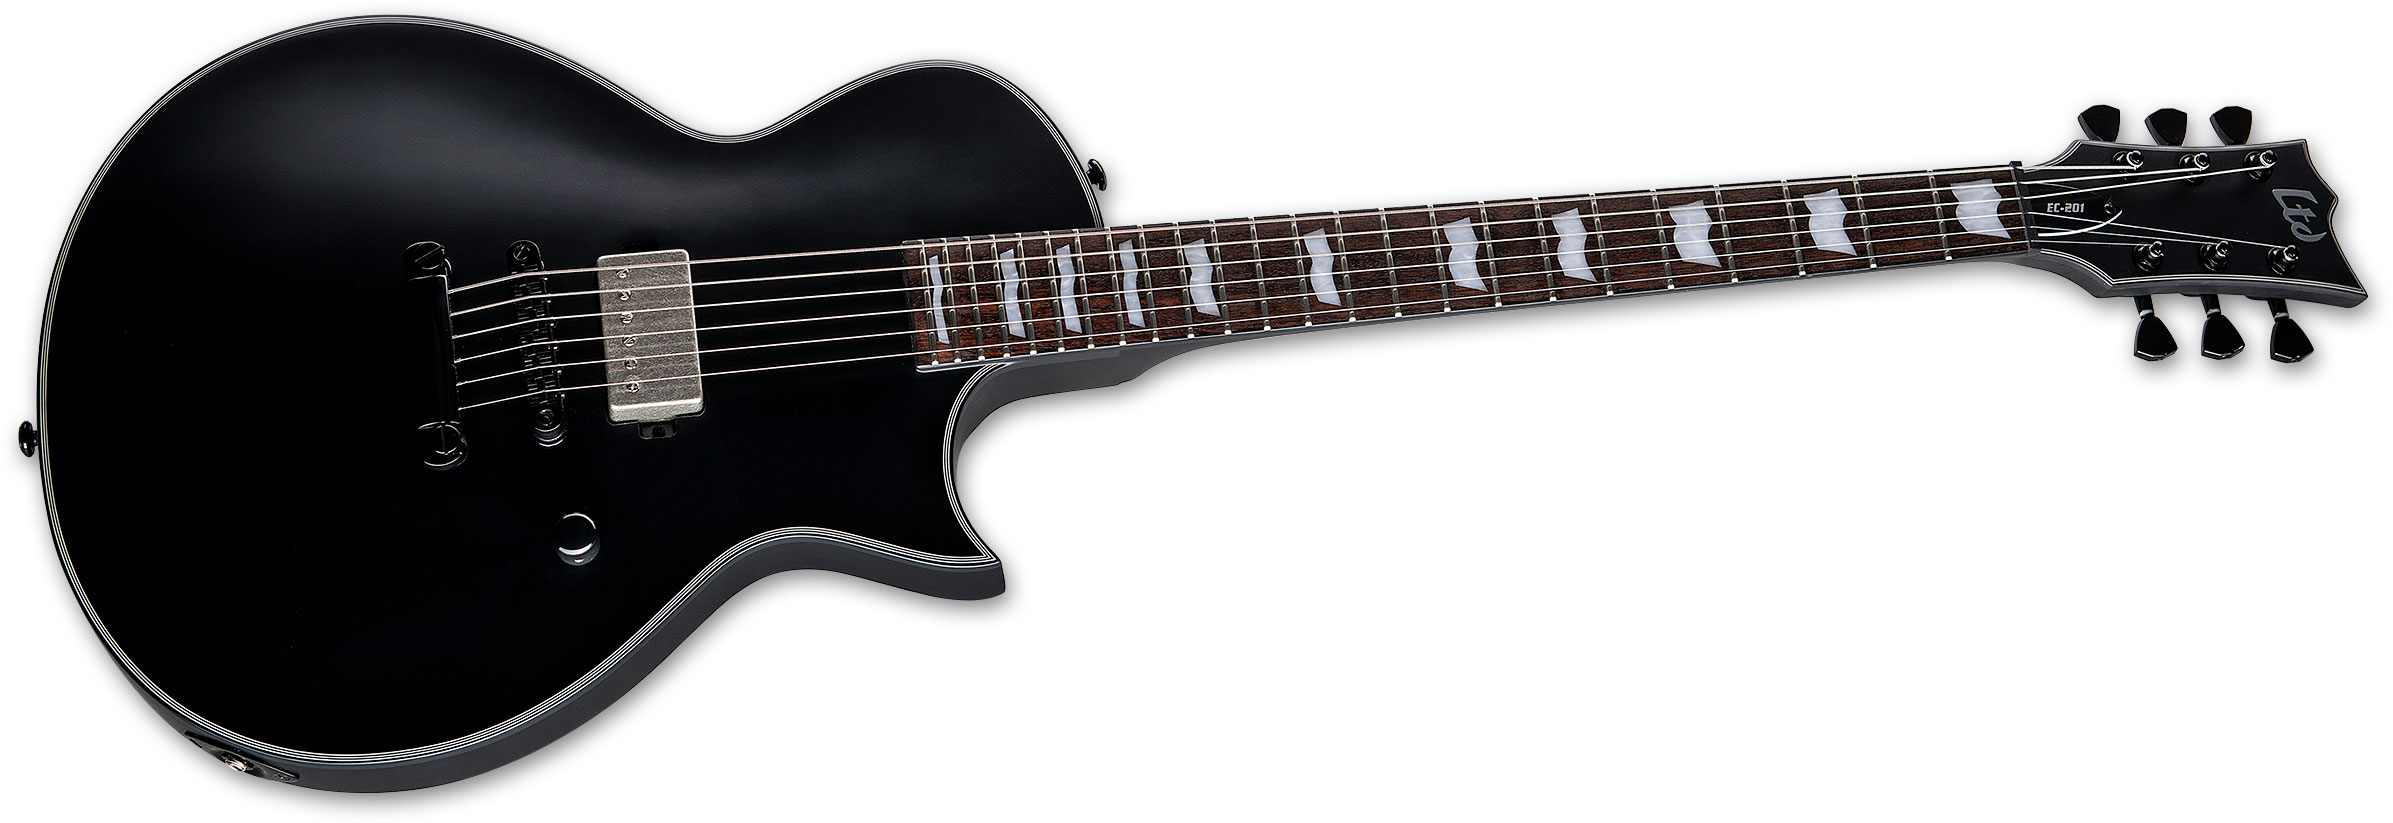 Ltd Ec-201 1h Ht Jat - Black Satin - Single cut electric guitar - Variation 1